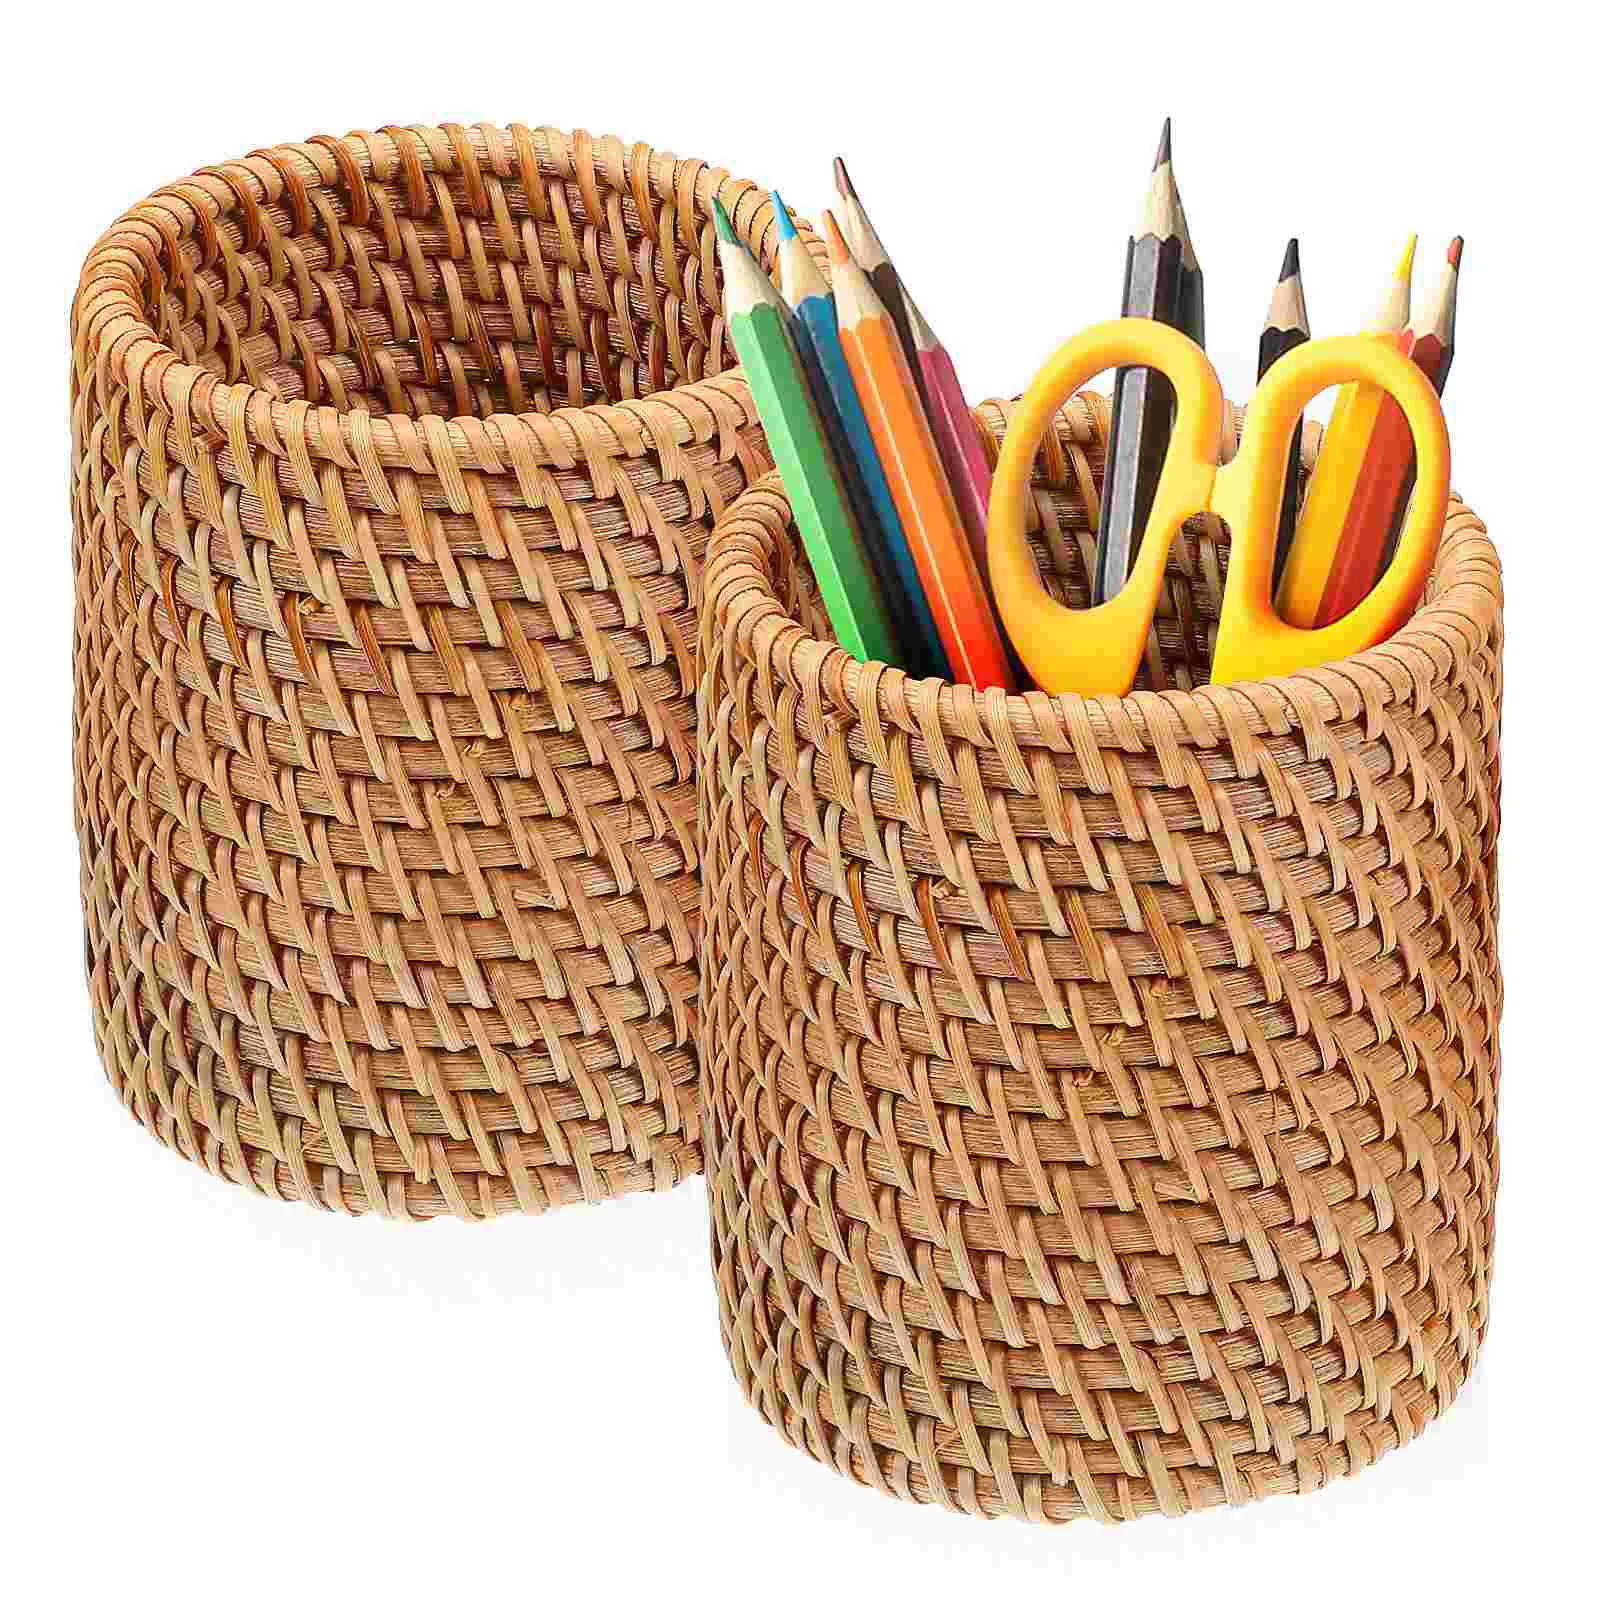 2pcs Pen Organizer Pencil Cup Holders Woven Pencil Pots Wooden Decorative Makeup Brush Organizers